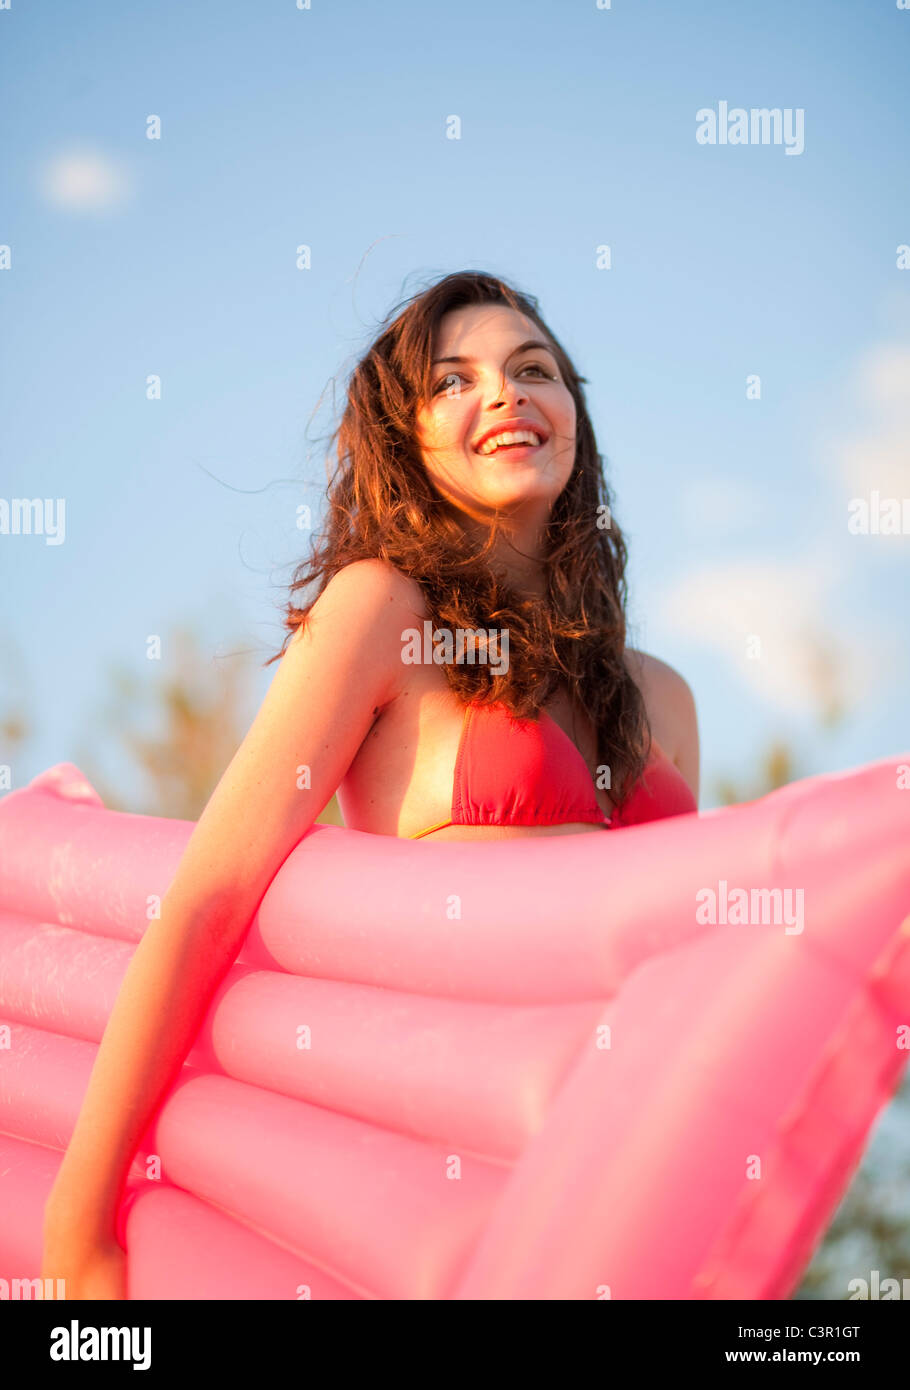 Croatia, Zadar, Young woman with air mattress on beach Stock Photo